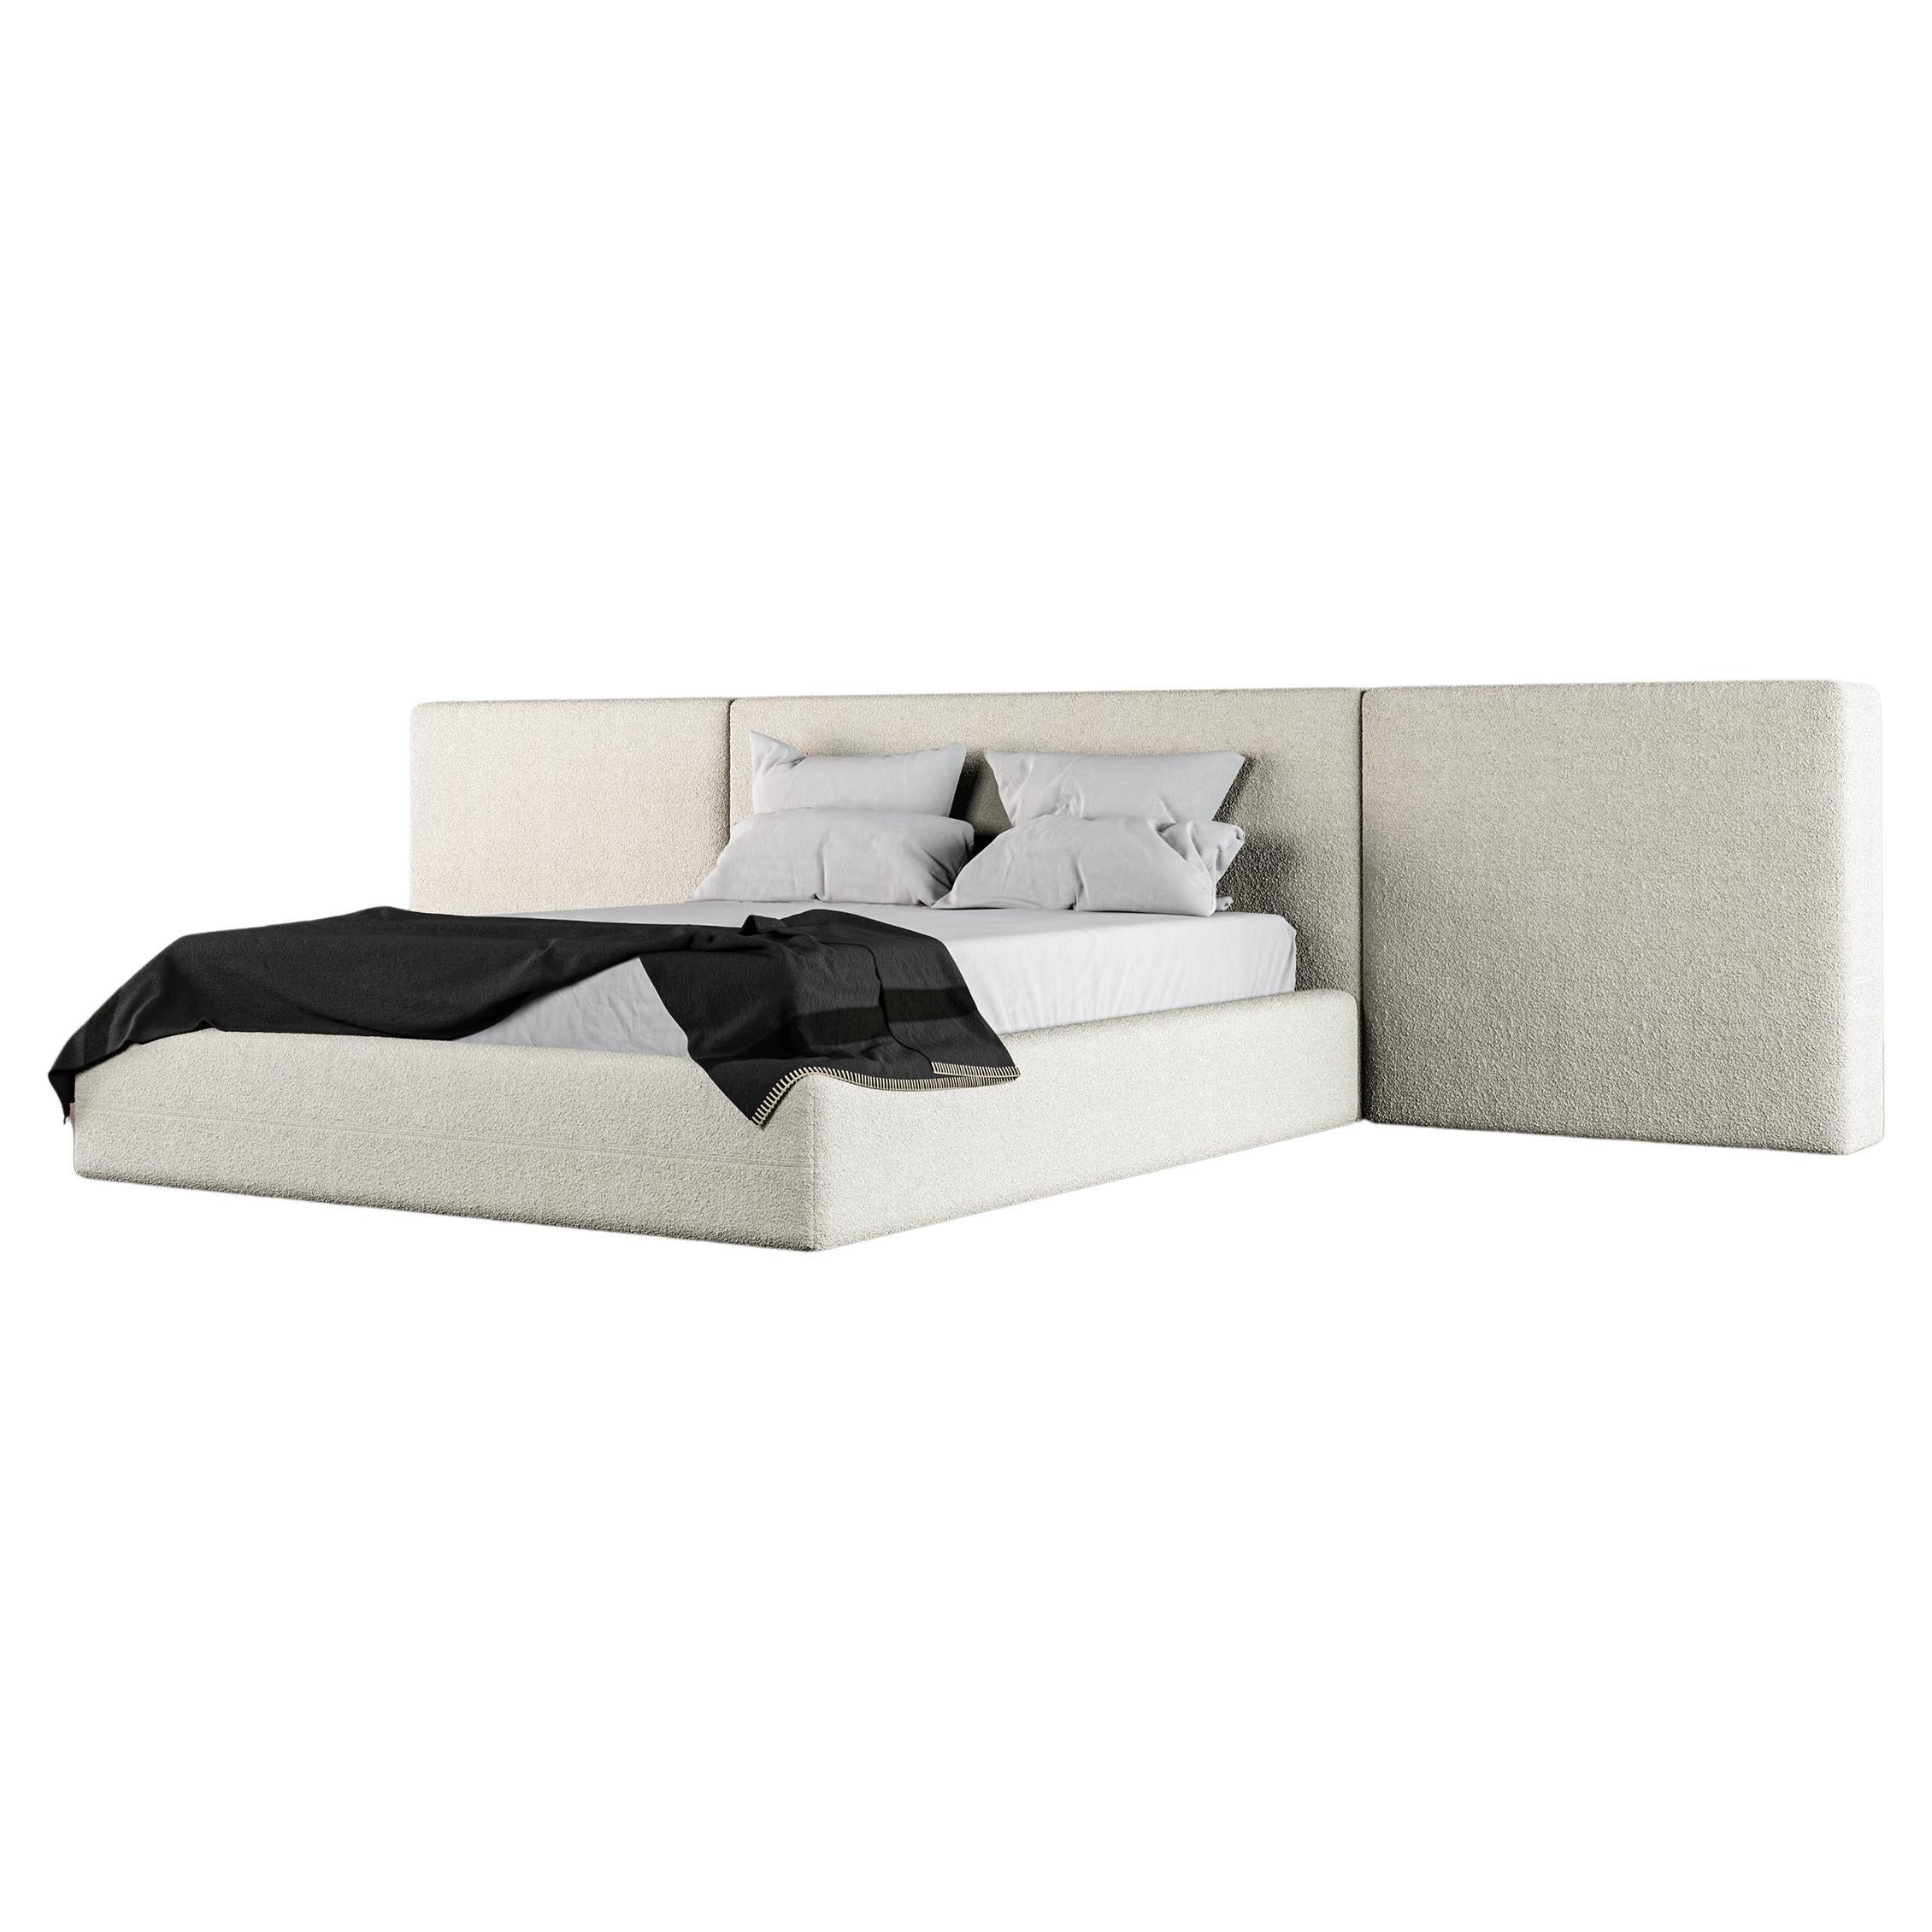 Drift Bed - Modern Design in Soft White Boucle For Sale